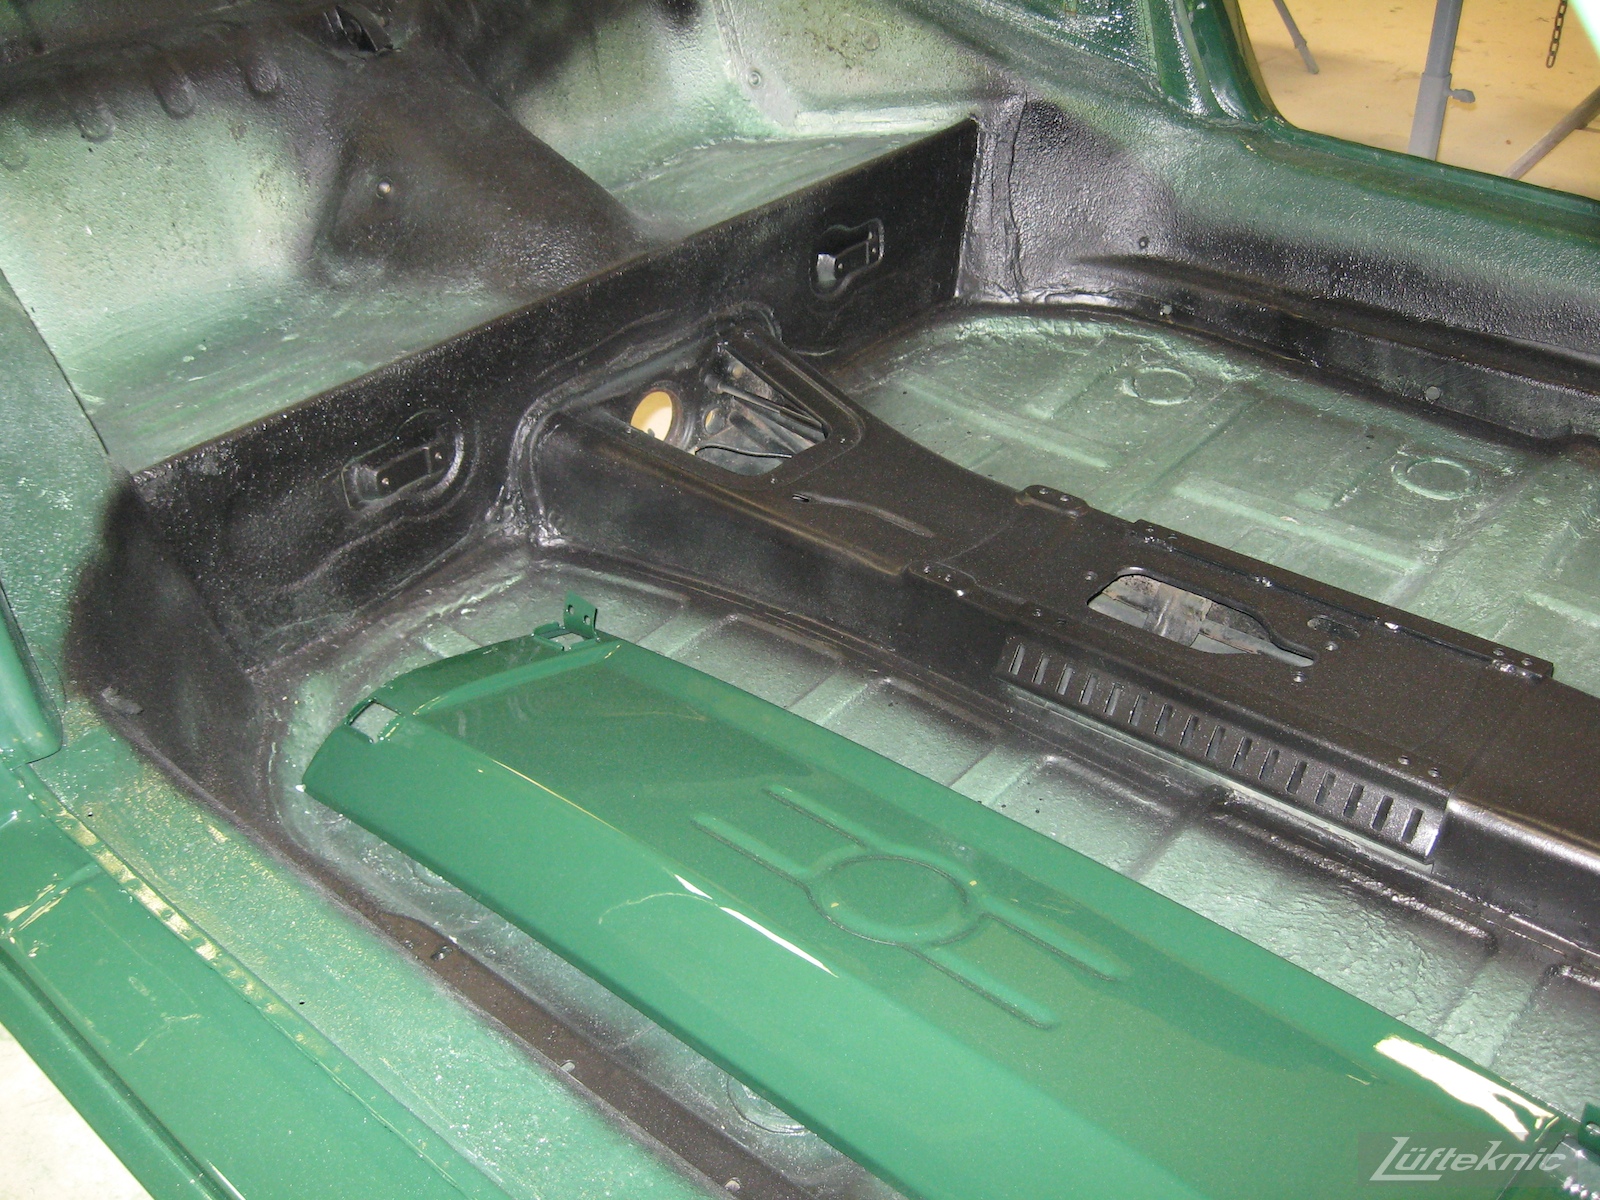 Body panel and floors of an Irish Green Porsche 912 undergoing restoration at Lufteknic.